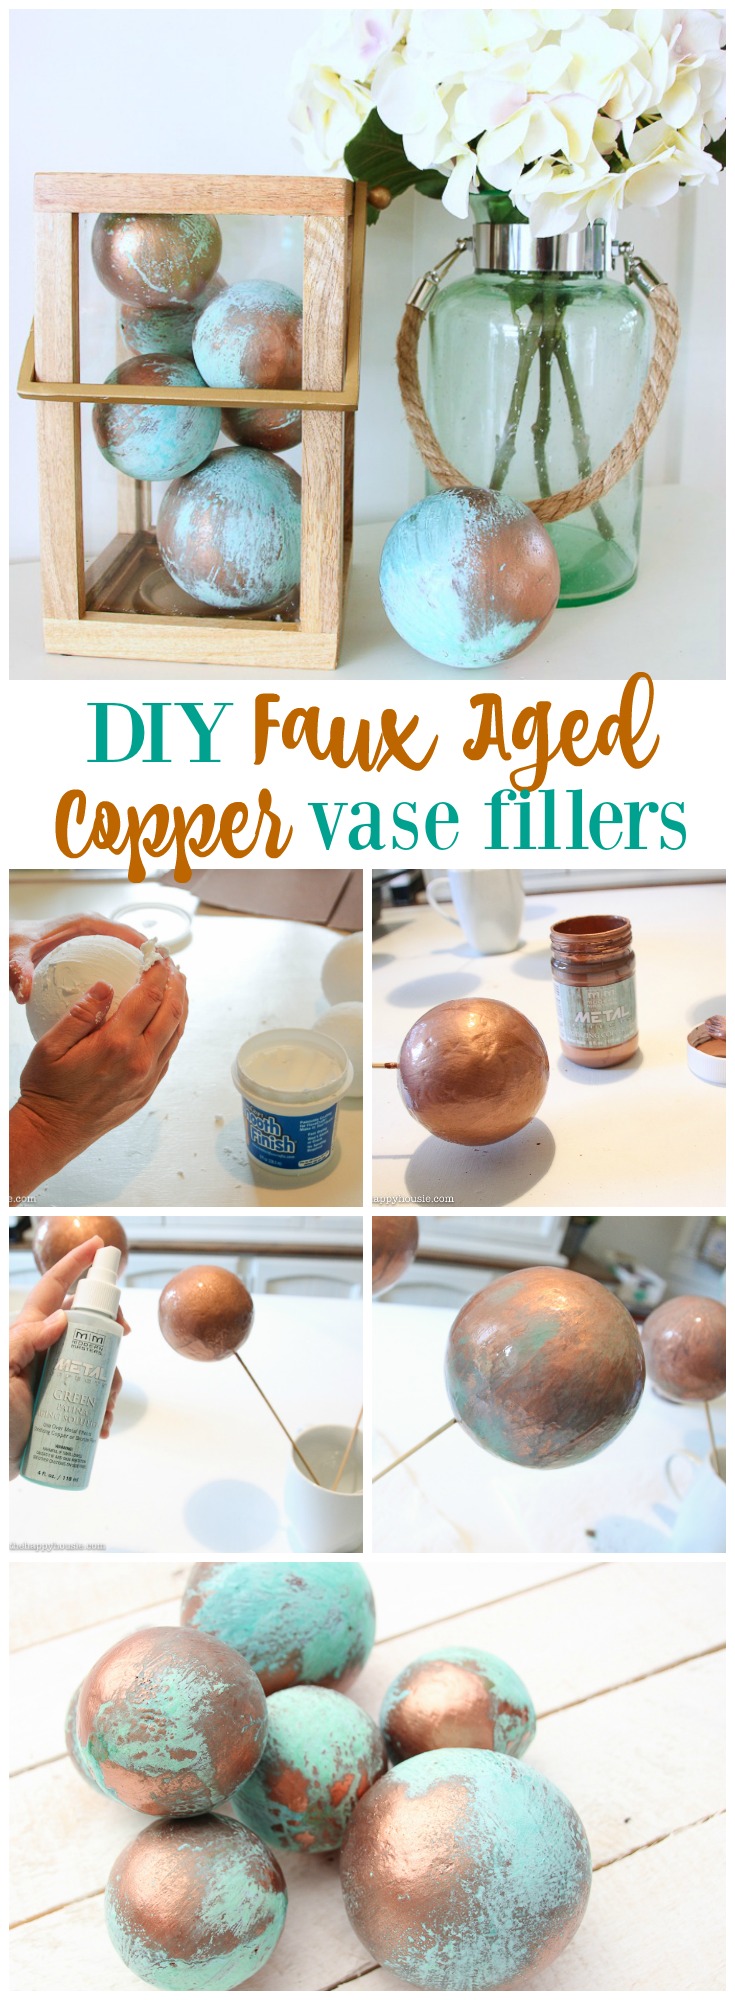 DIY Faux Aged Copper Vase Fillers graphic.